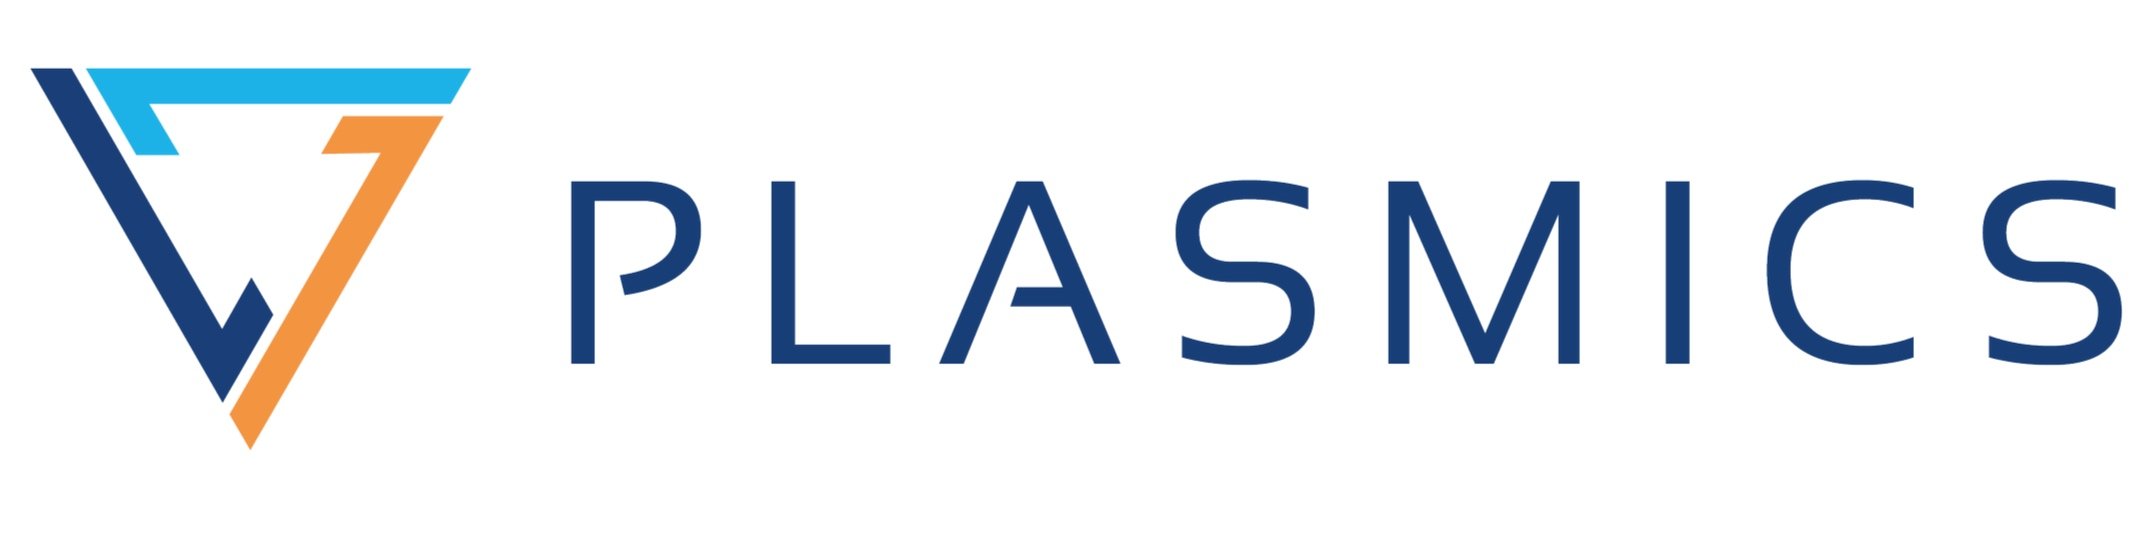 Plasmics_Logo_BlueFont.jpg